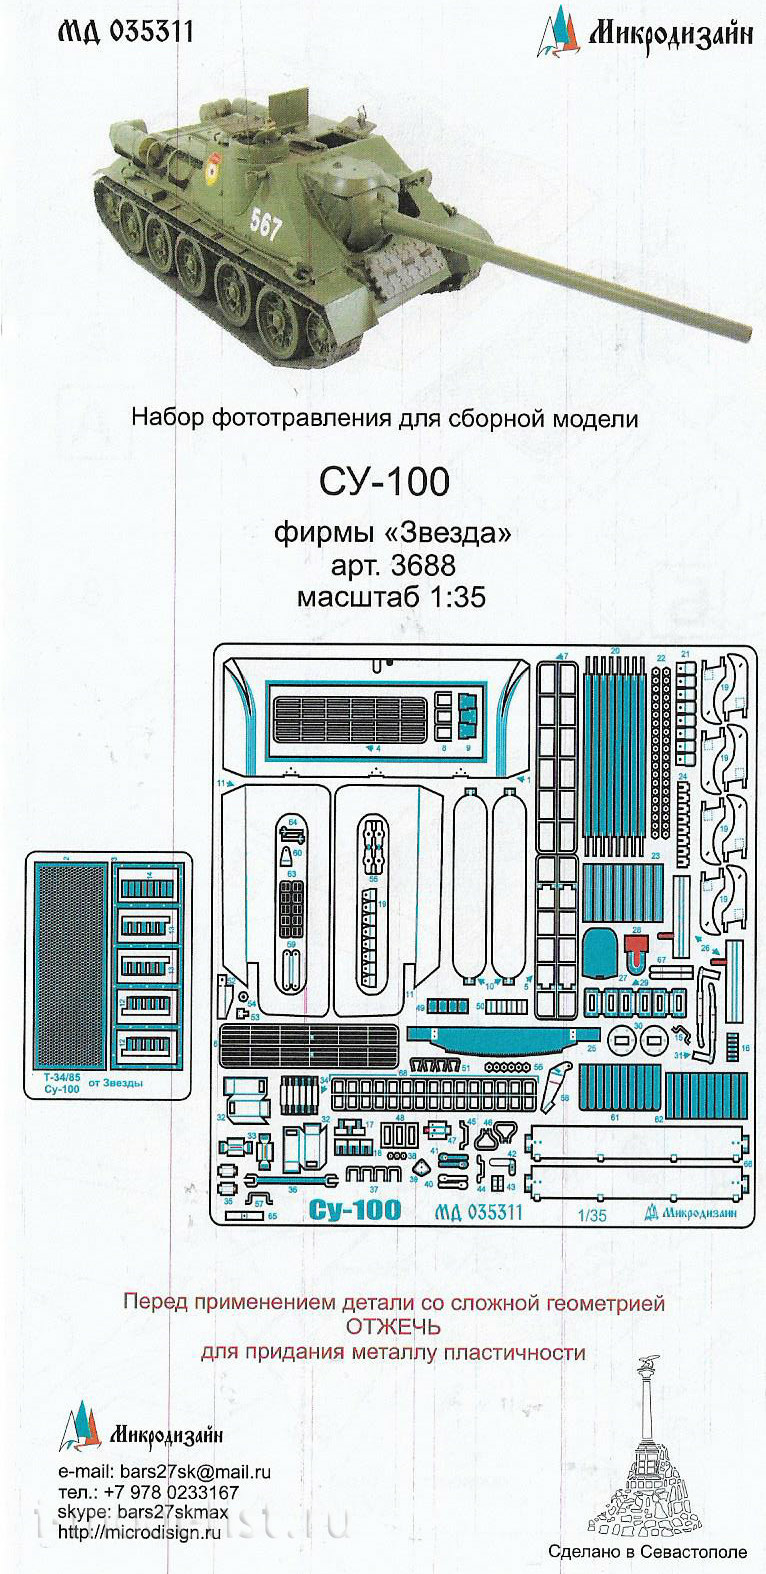 035311 Microdesign 1/35 SU-100. Main set (Zvezda)